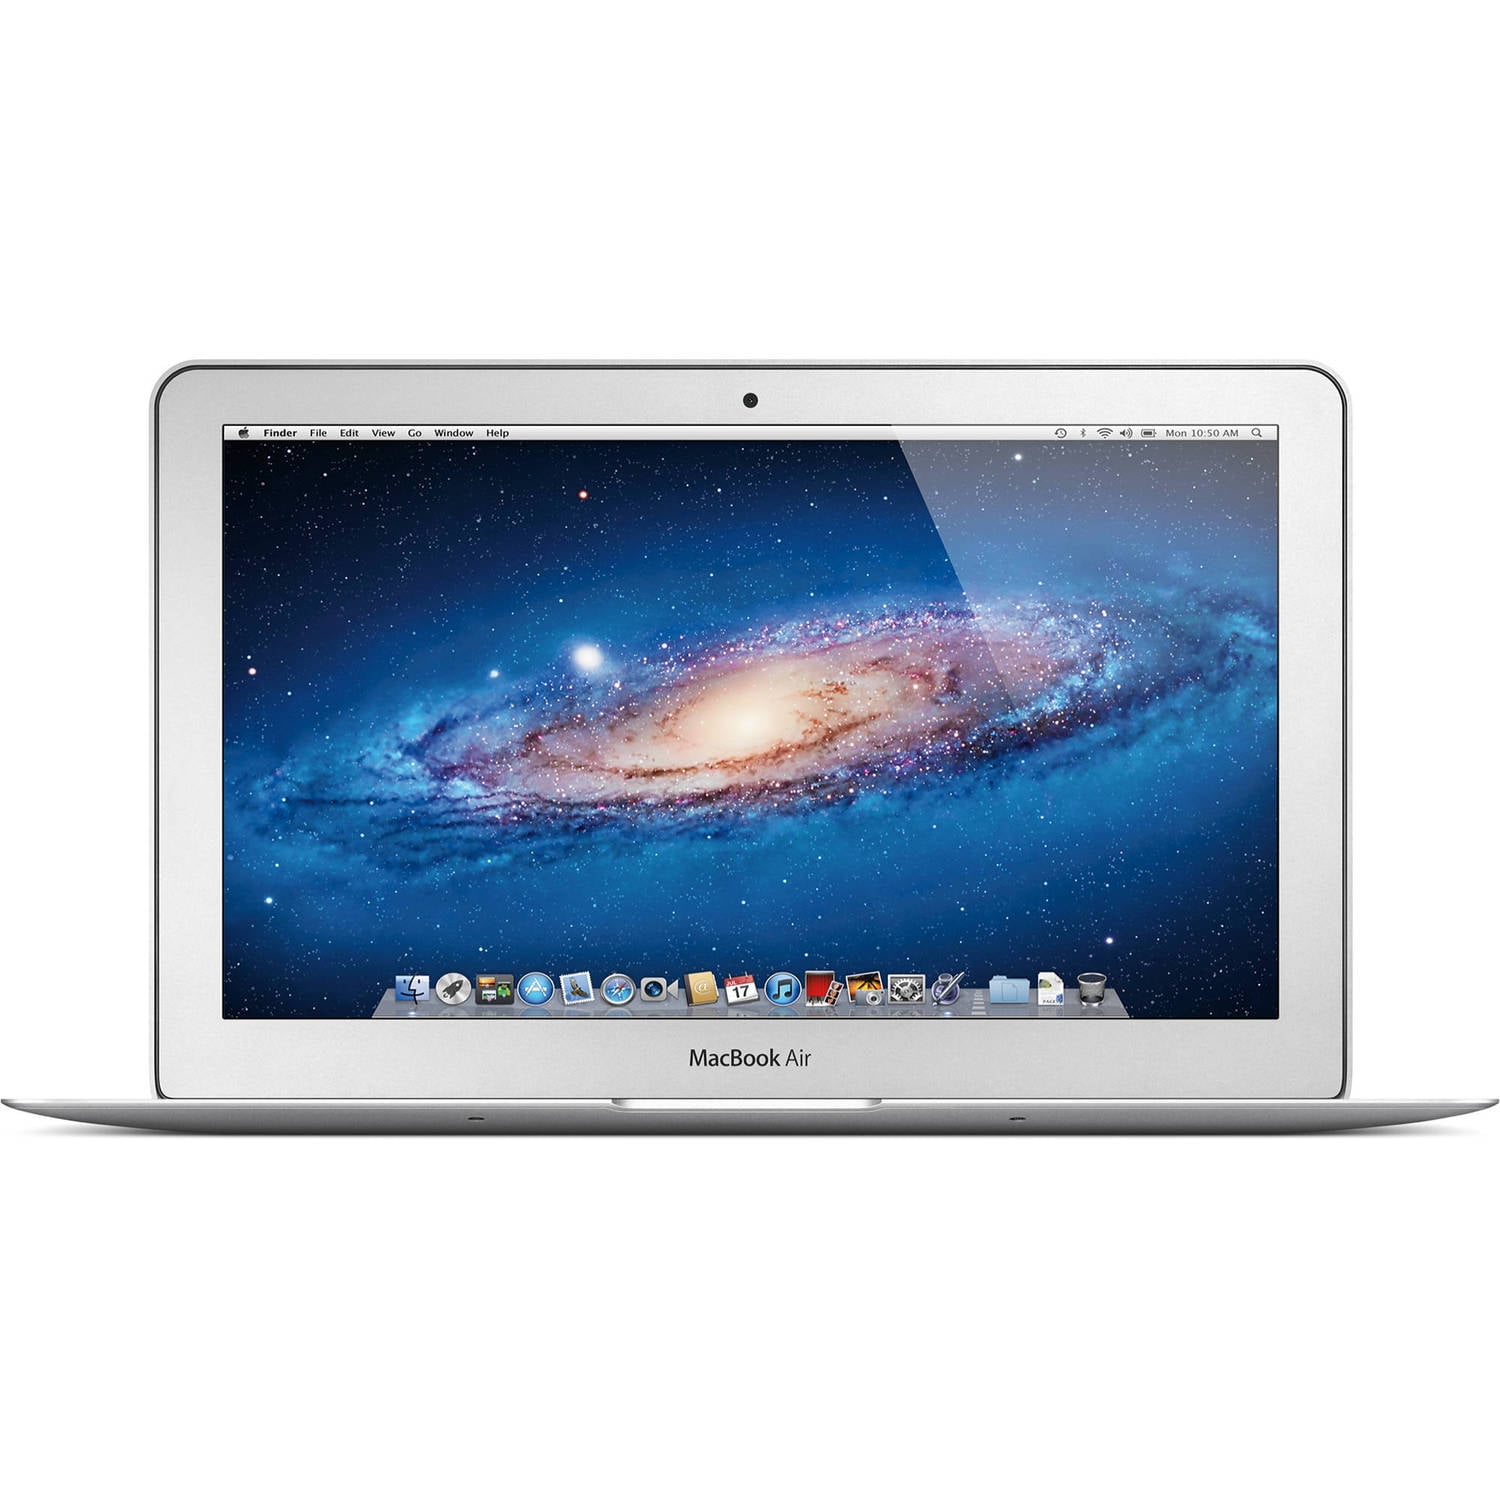 Refurbished Apple Macbook Air 11.6" Laptop (Core i5 1.7GHz, 4GB Ram